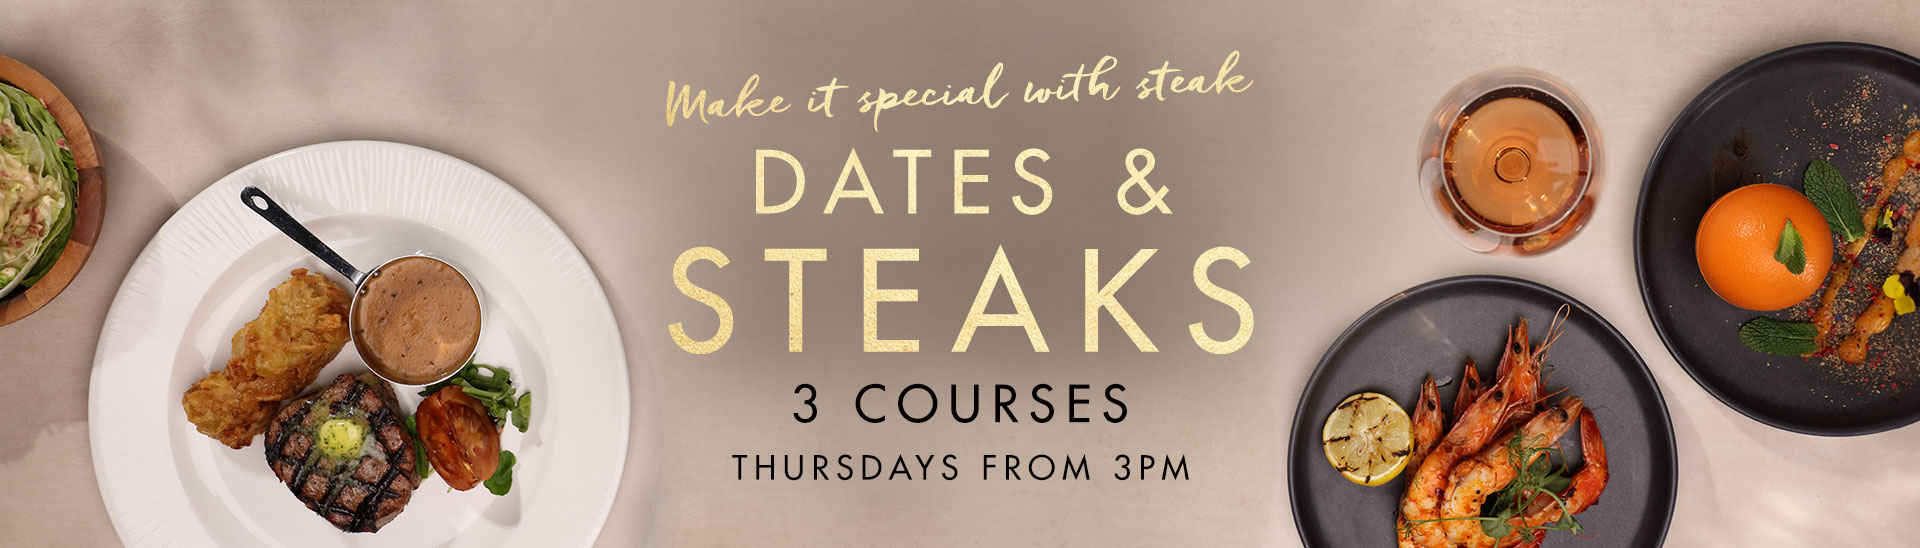 Dates & Steaks at Miller & Carter Maidstone